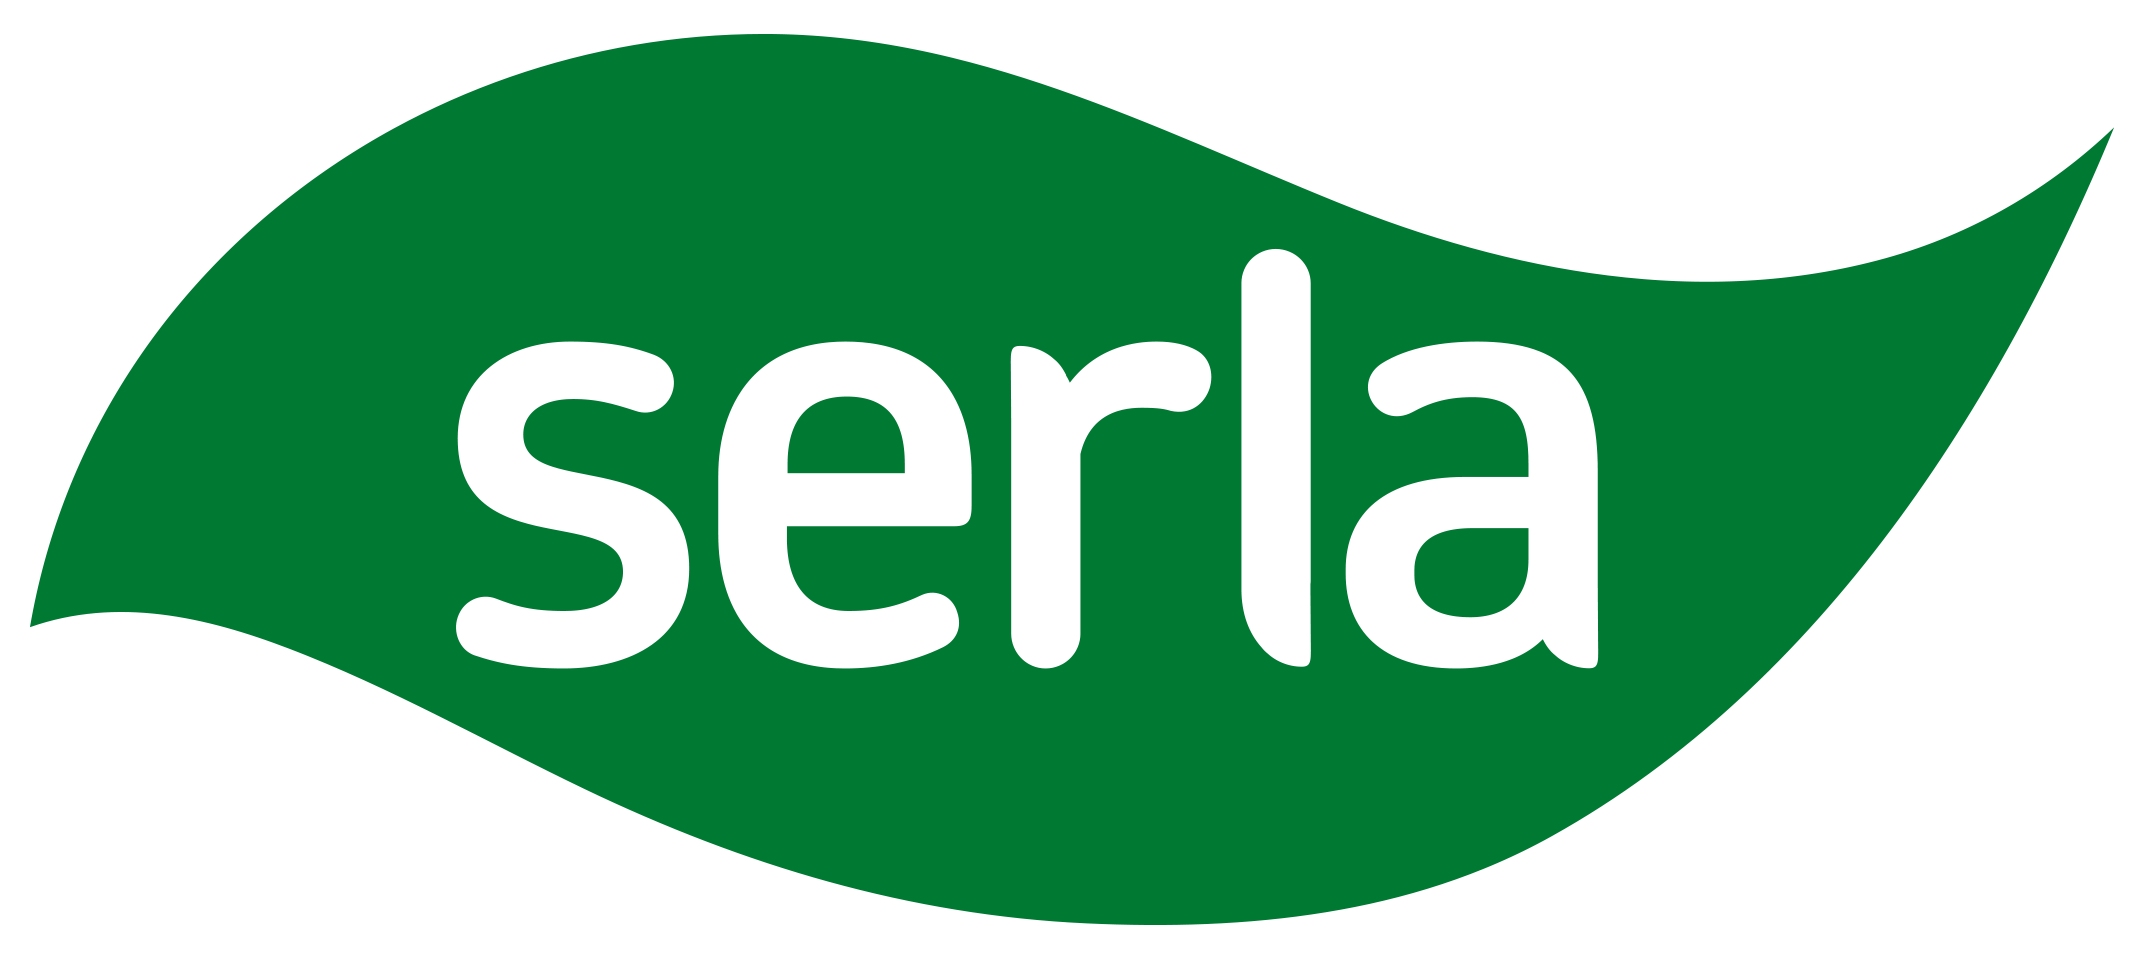 Serla-logo-green-RGB.png